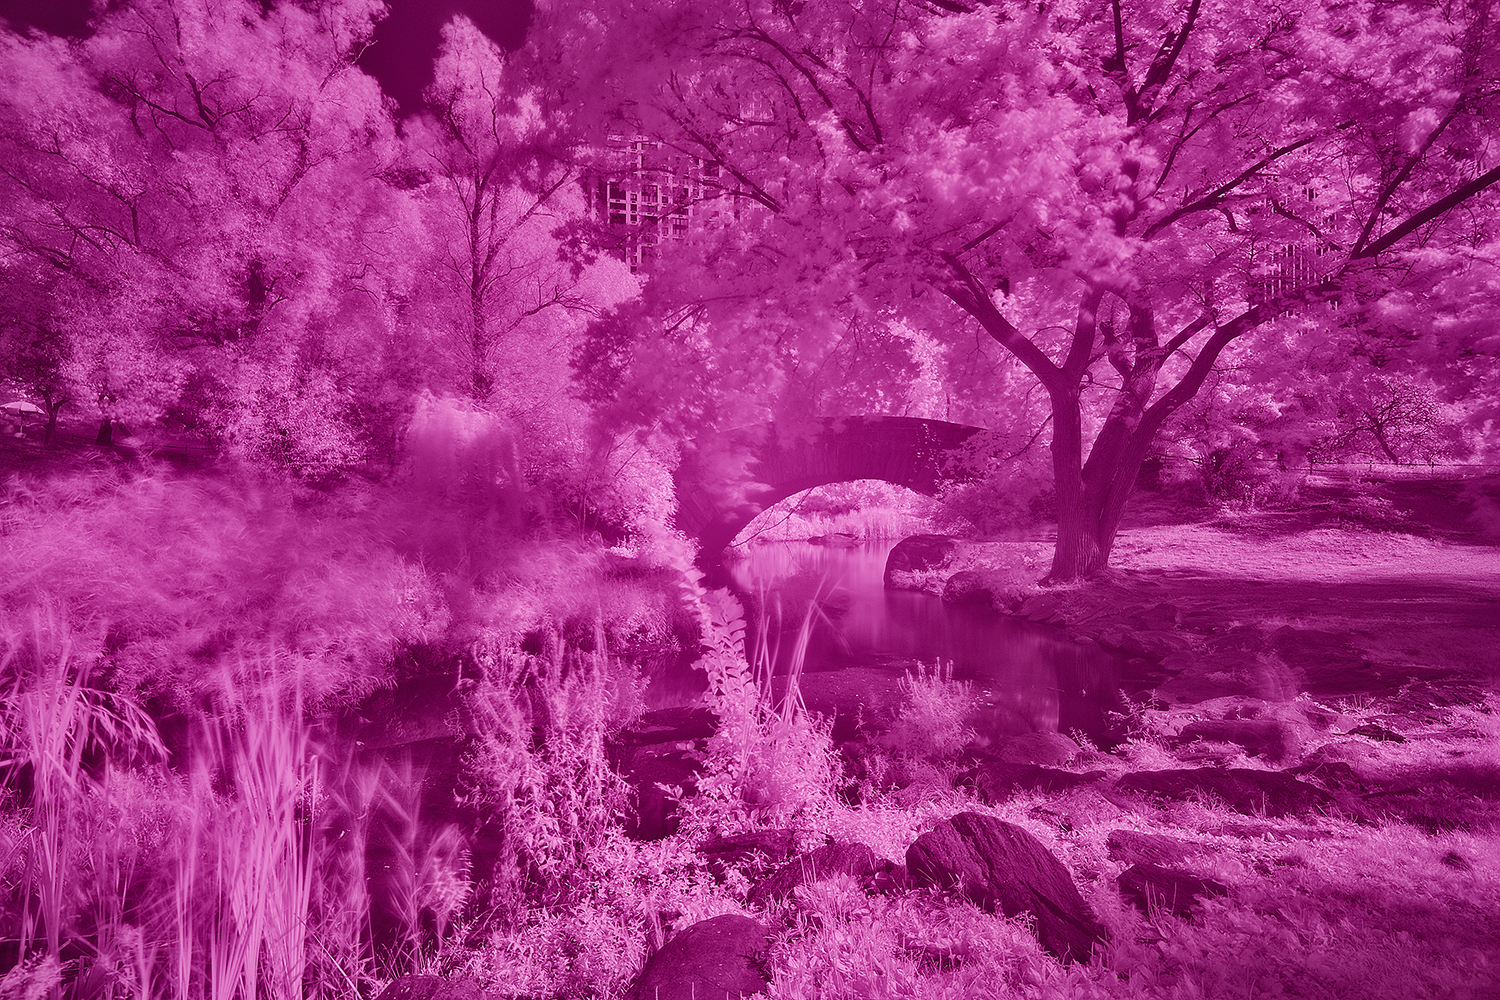 Central_Park_Infrared